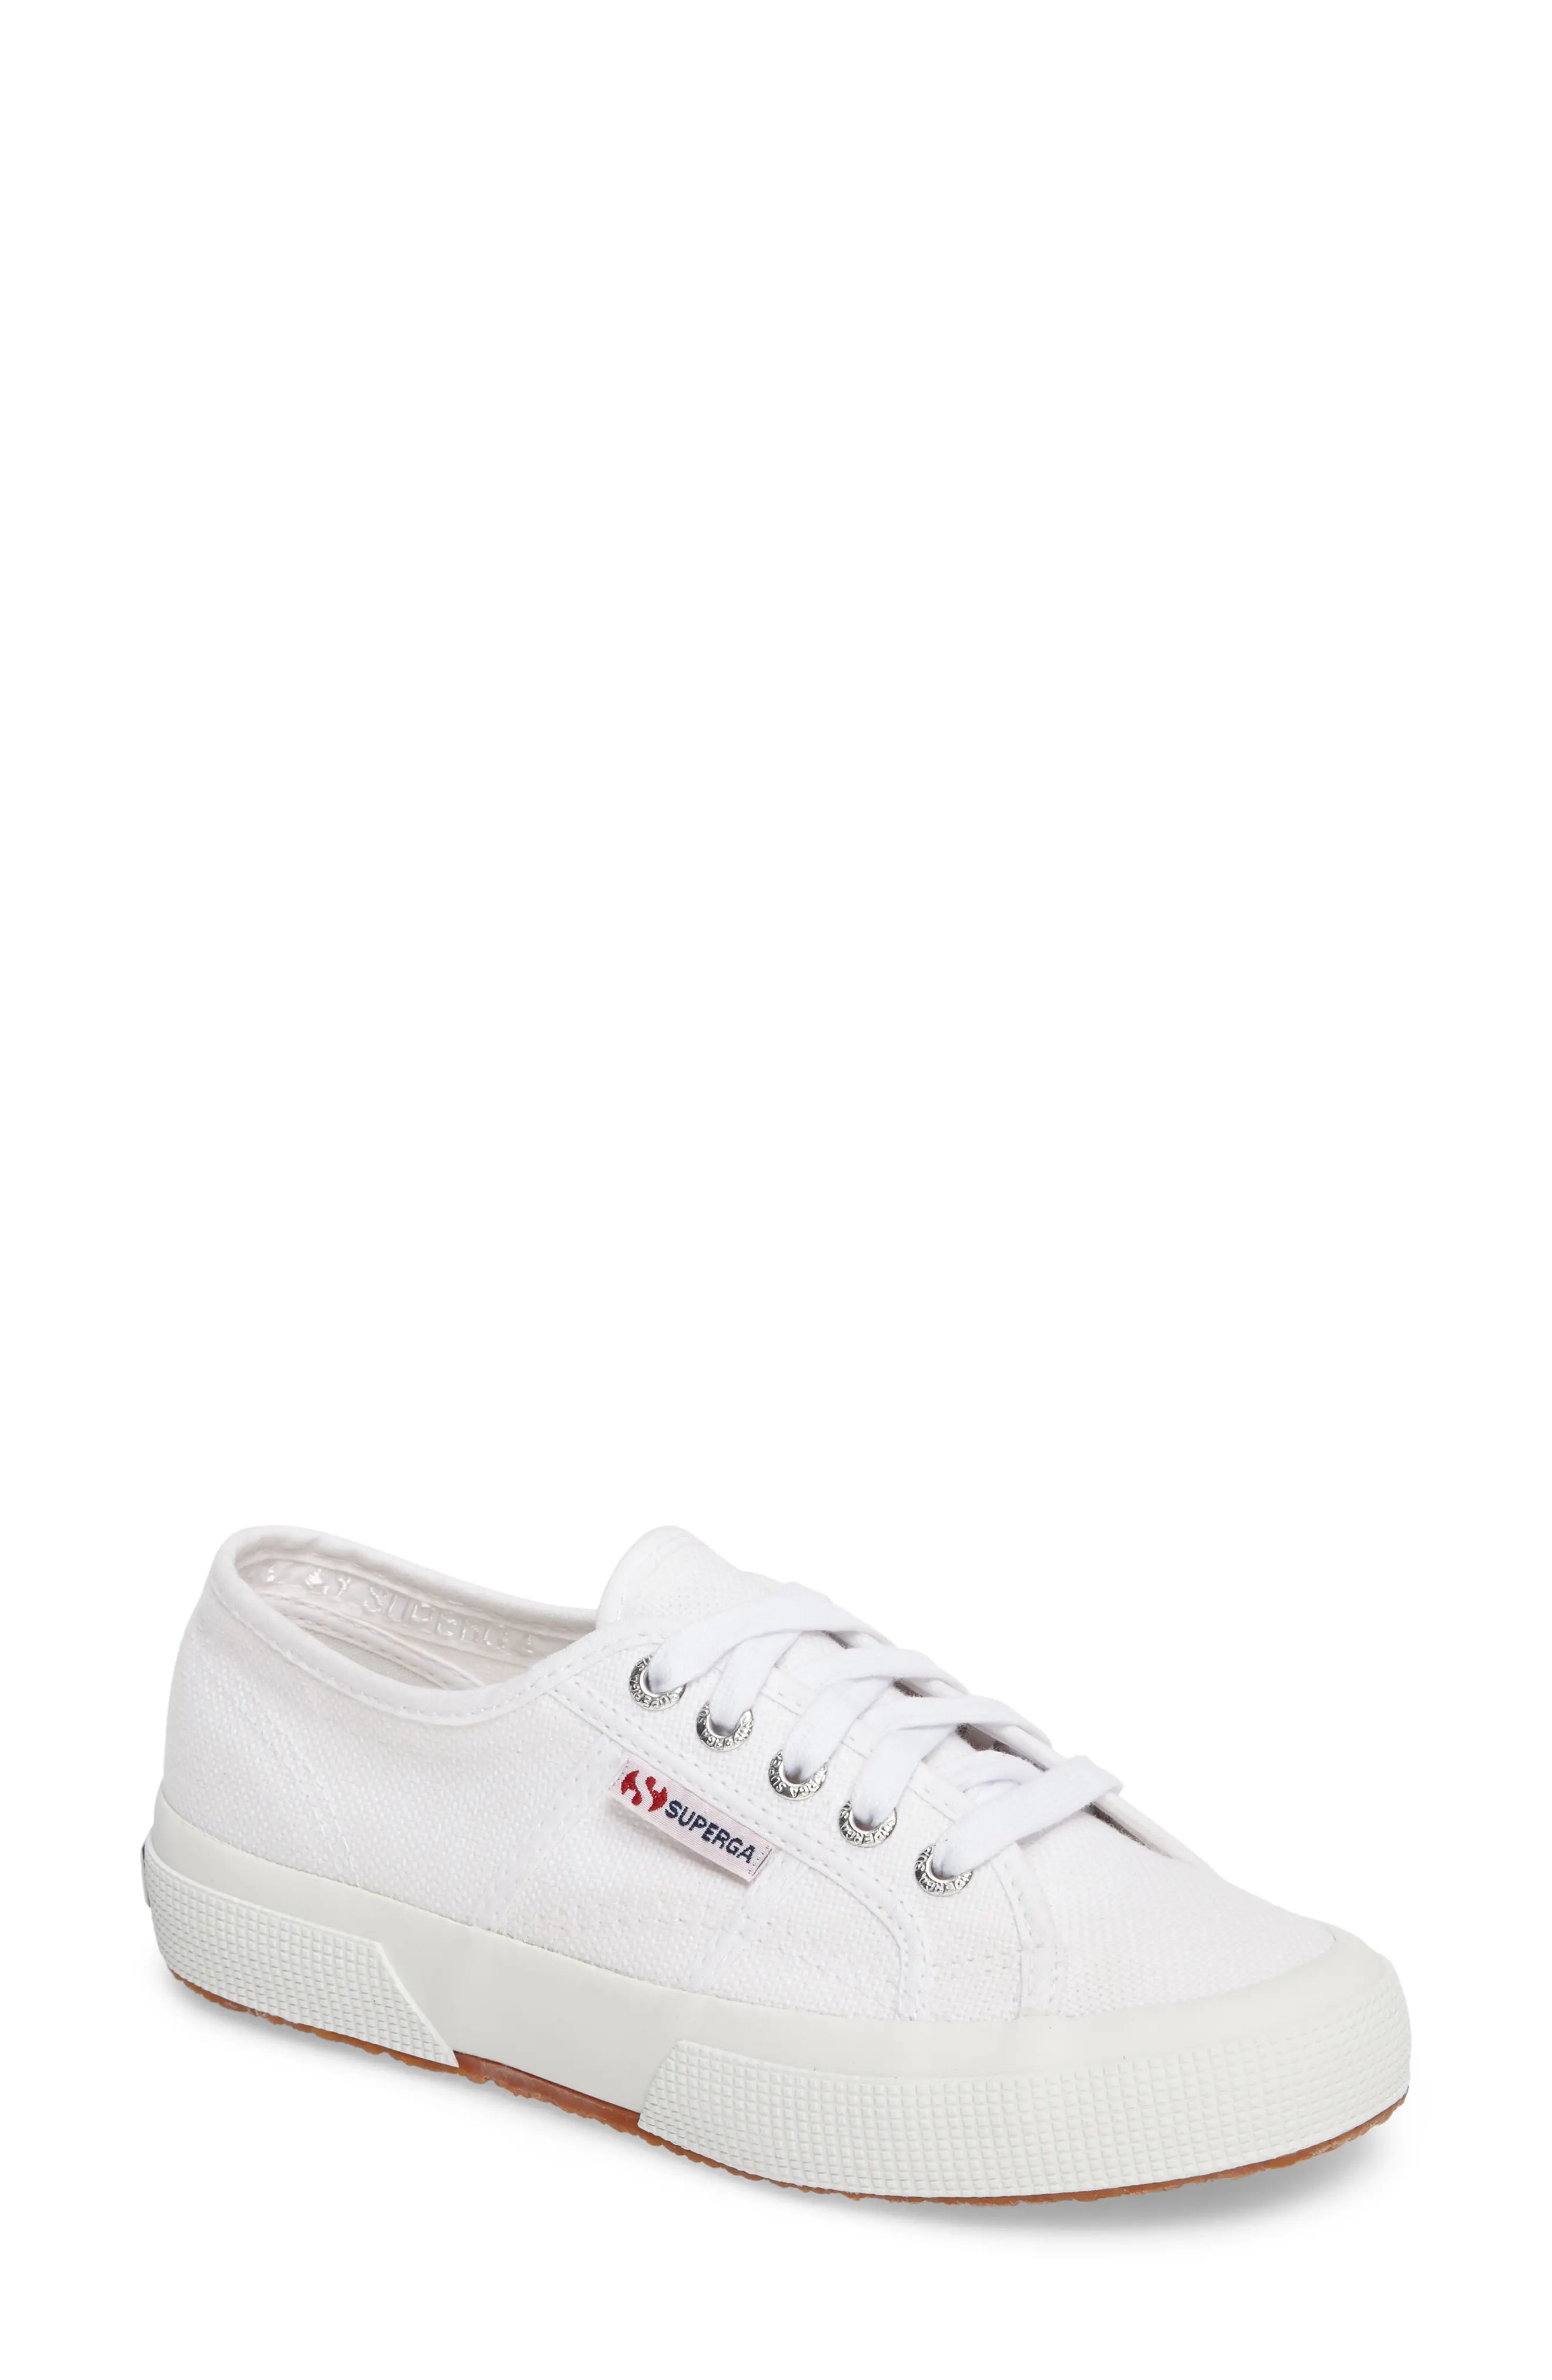 Women's Superga 'Cotu' Sneaker, Size 5US / 35EU - White | Nordstrom